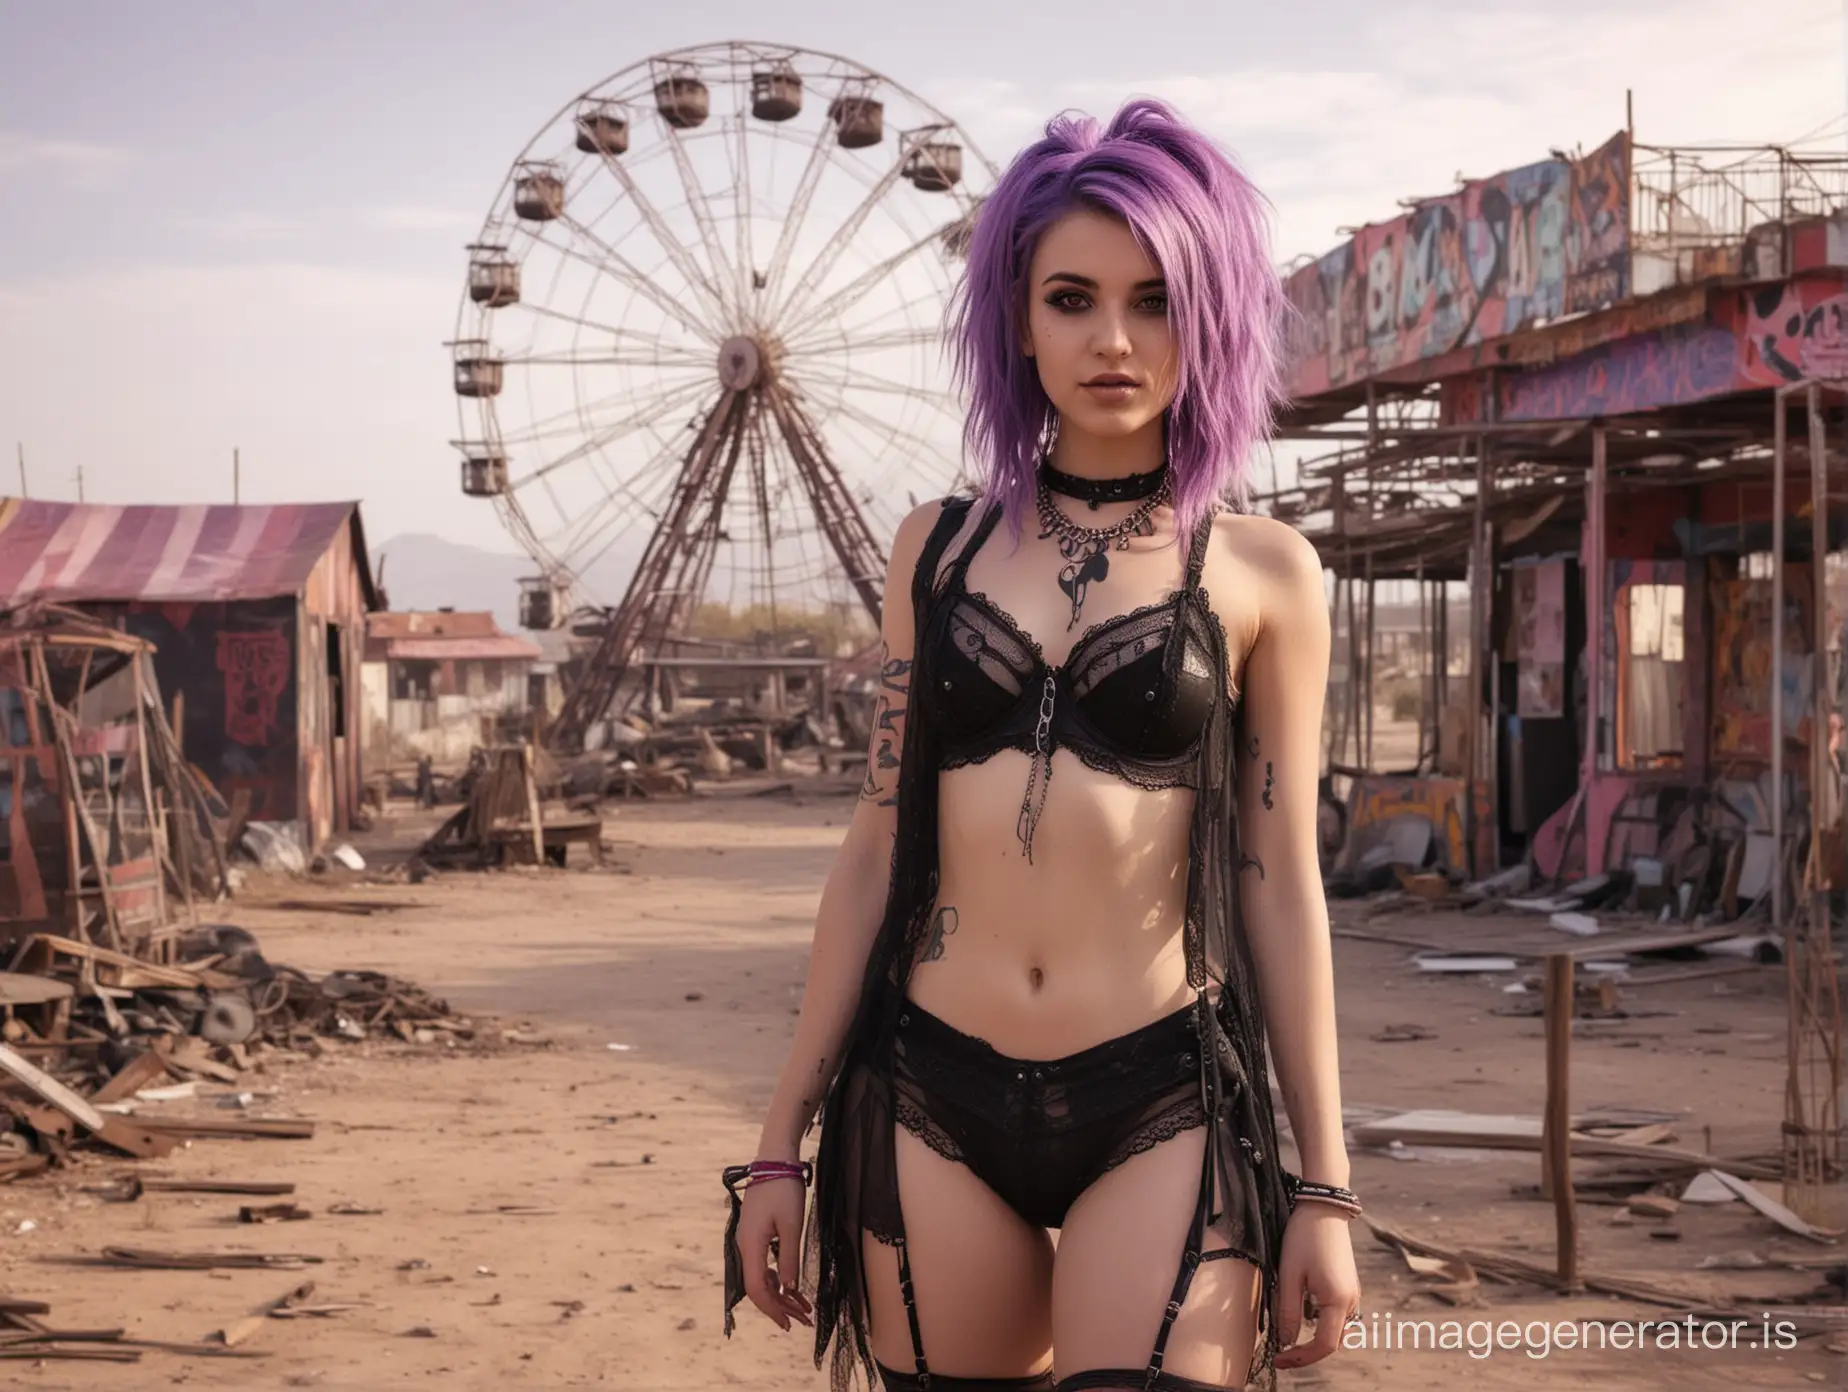 Mysterious-Goth-Girl-in-Abandoned-Desert-Carnival-Setting